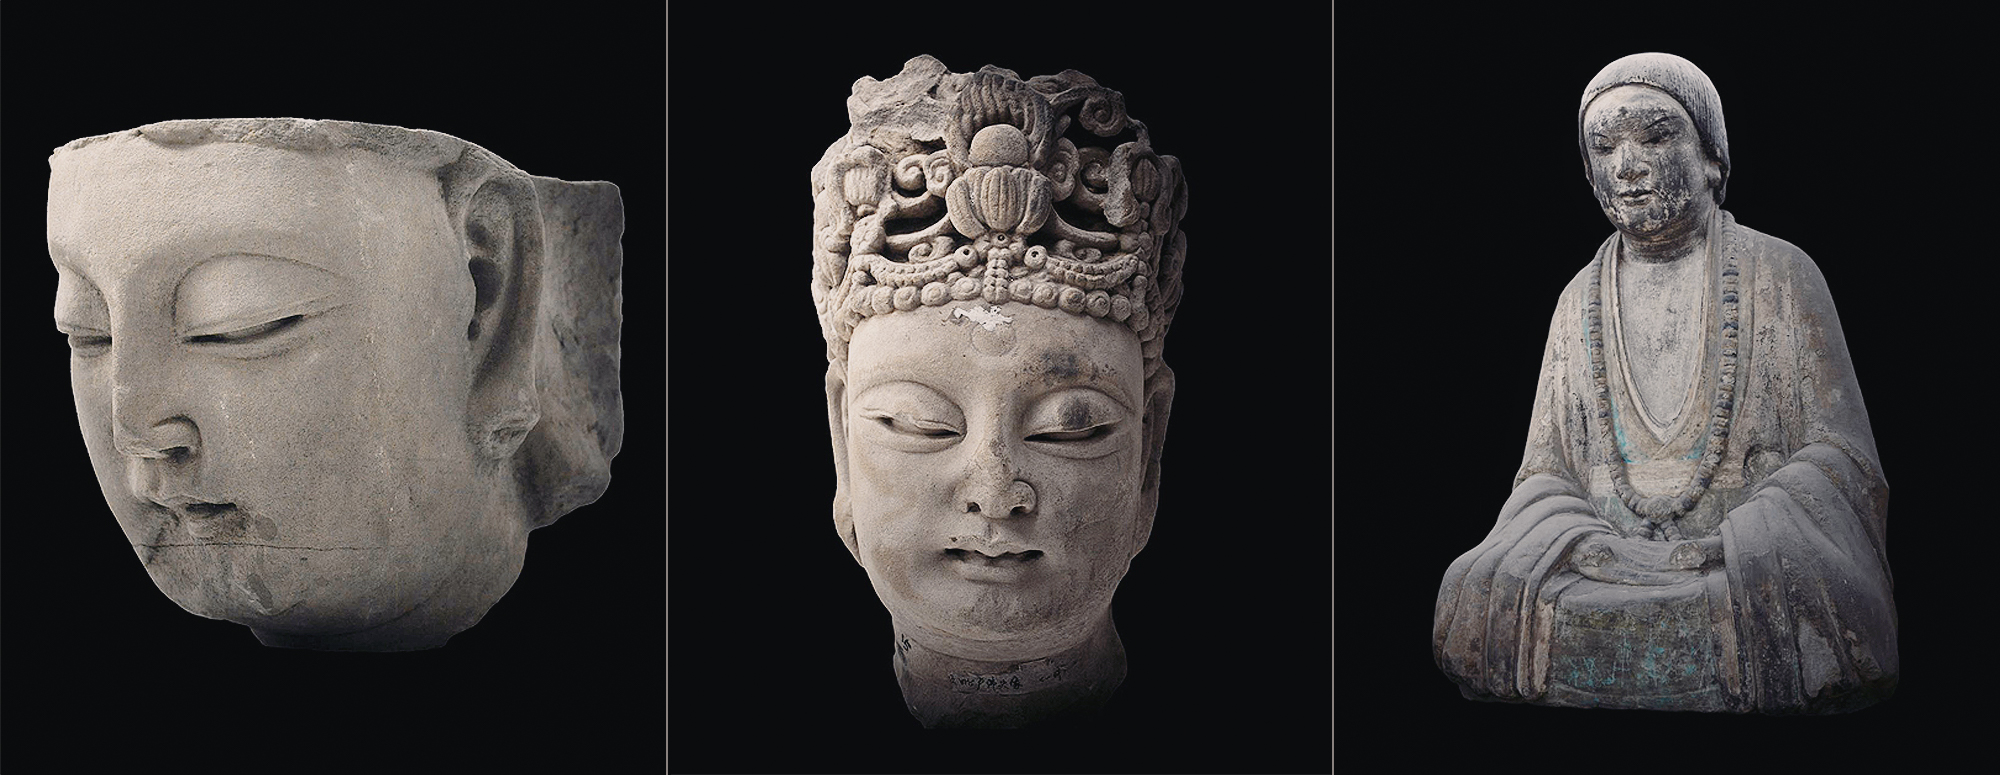 Head of a bodhisattva Head of Vairocana Buddha A meditating monk perhaps Zhao Zhifeng Dazu Song dynasty Rock Art Carvings Dazu China